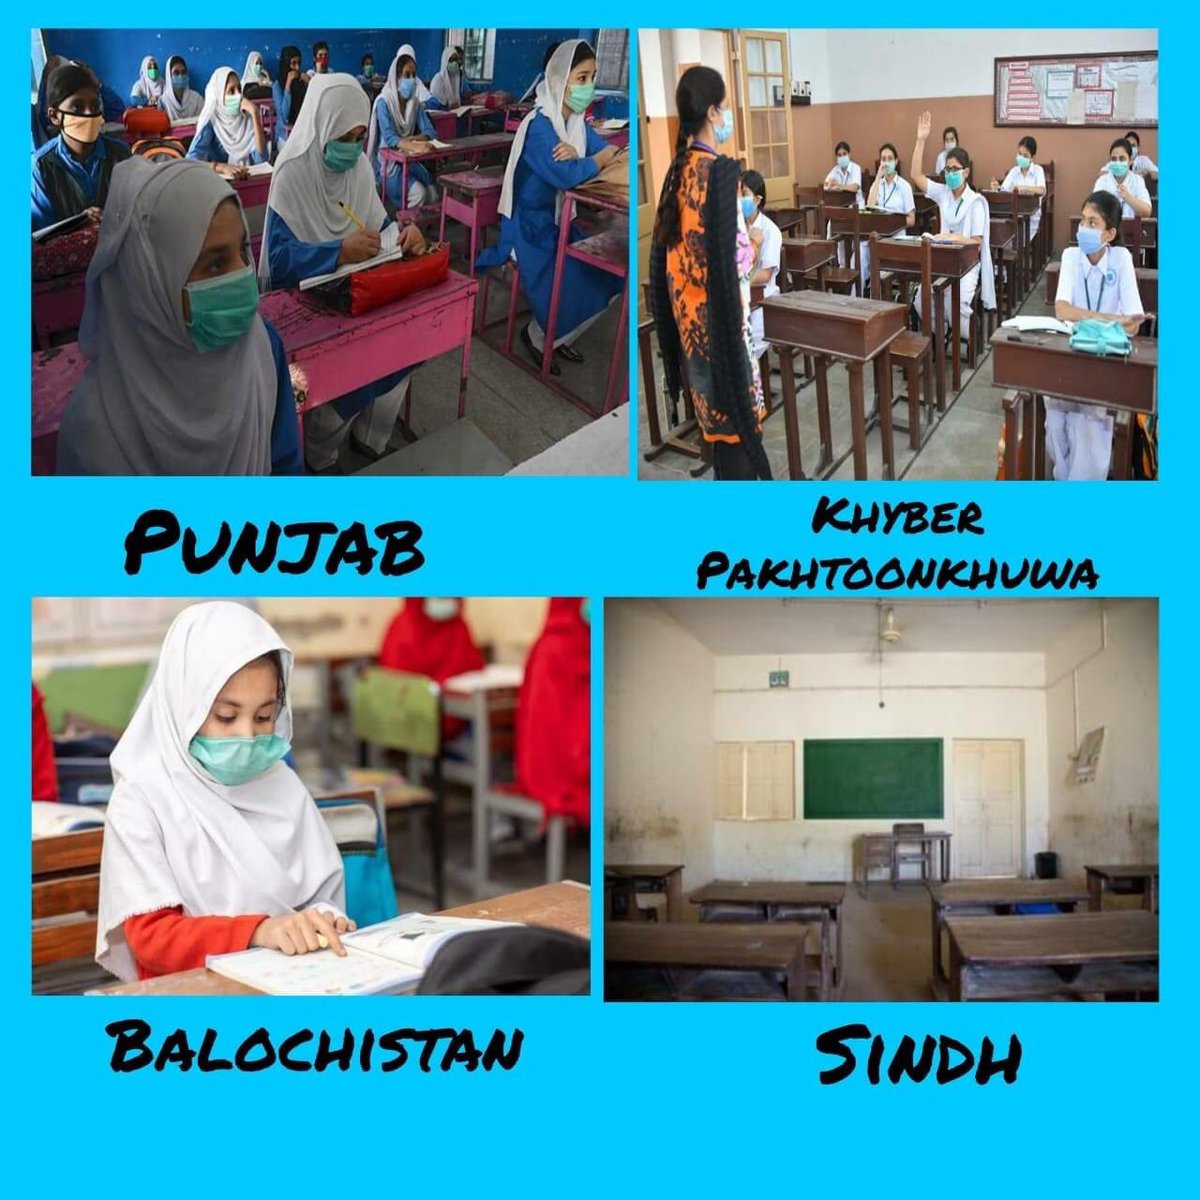 Sindh Now a Days🥲 #SaveEducationSaveNation
#SaveEducationOfSindh
#TakeBackPakStudentsToChina